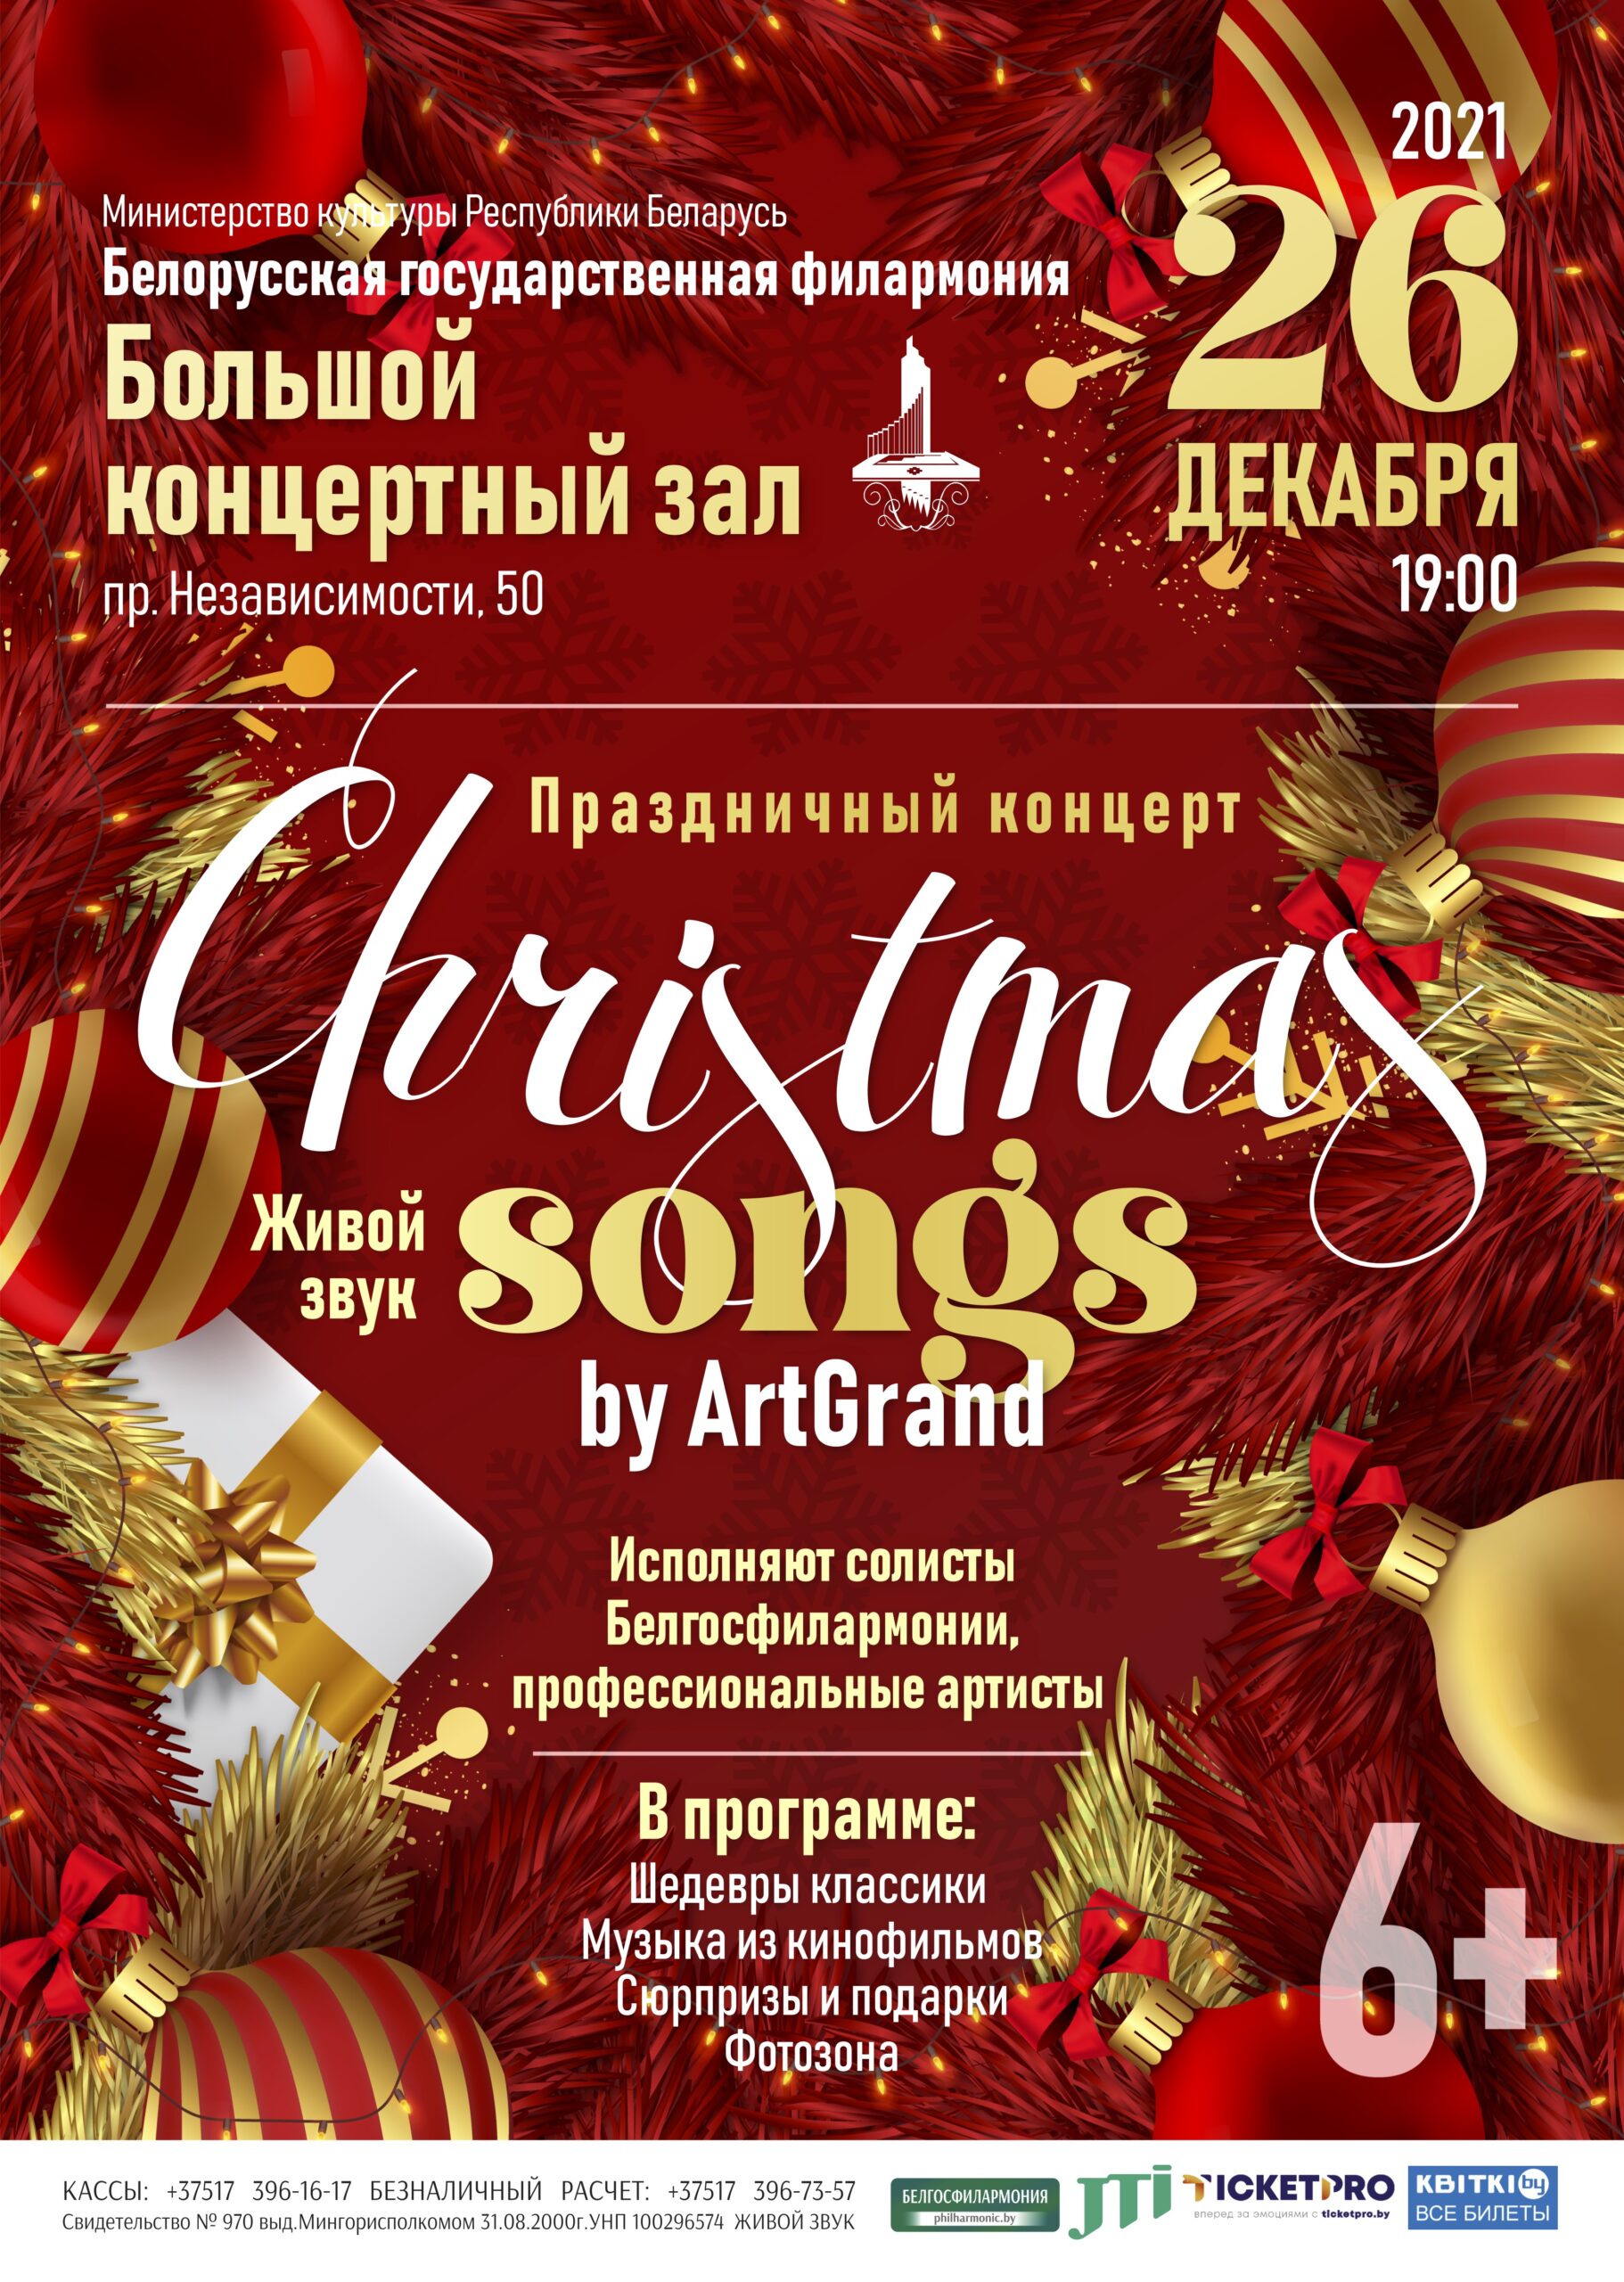 Рожденственскией концерт АртГранд_Christmas Songs by ArtGrand